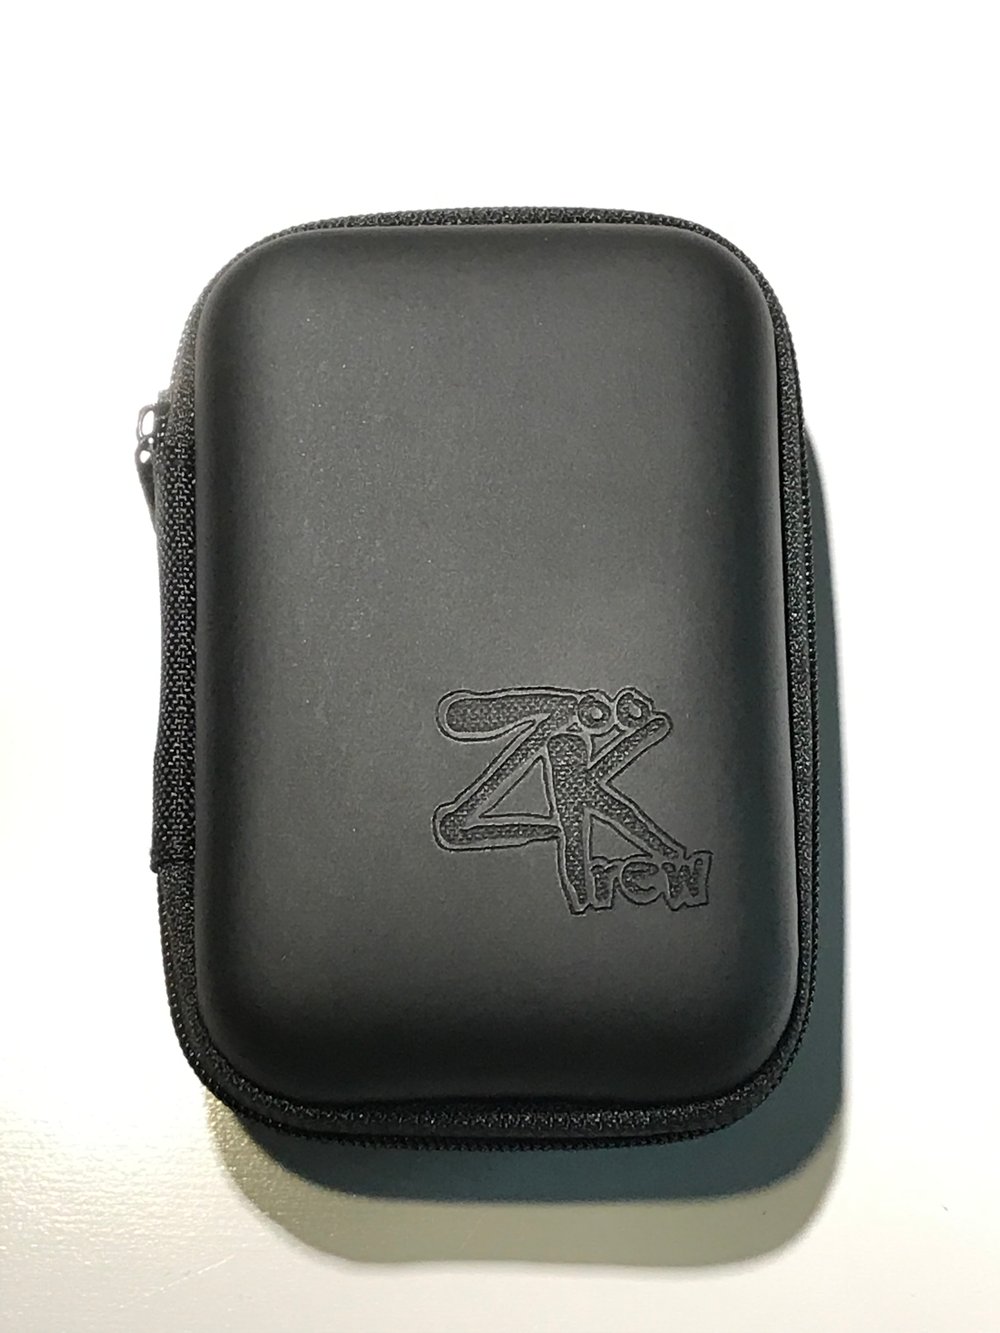 ZooKrew Hardcase pocket pouch